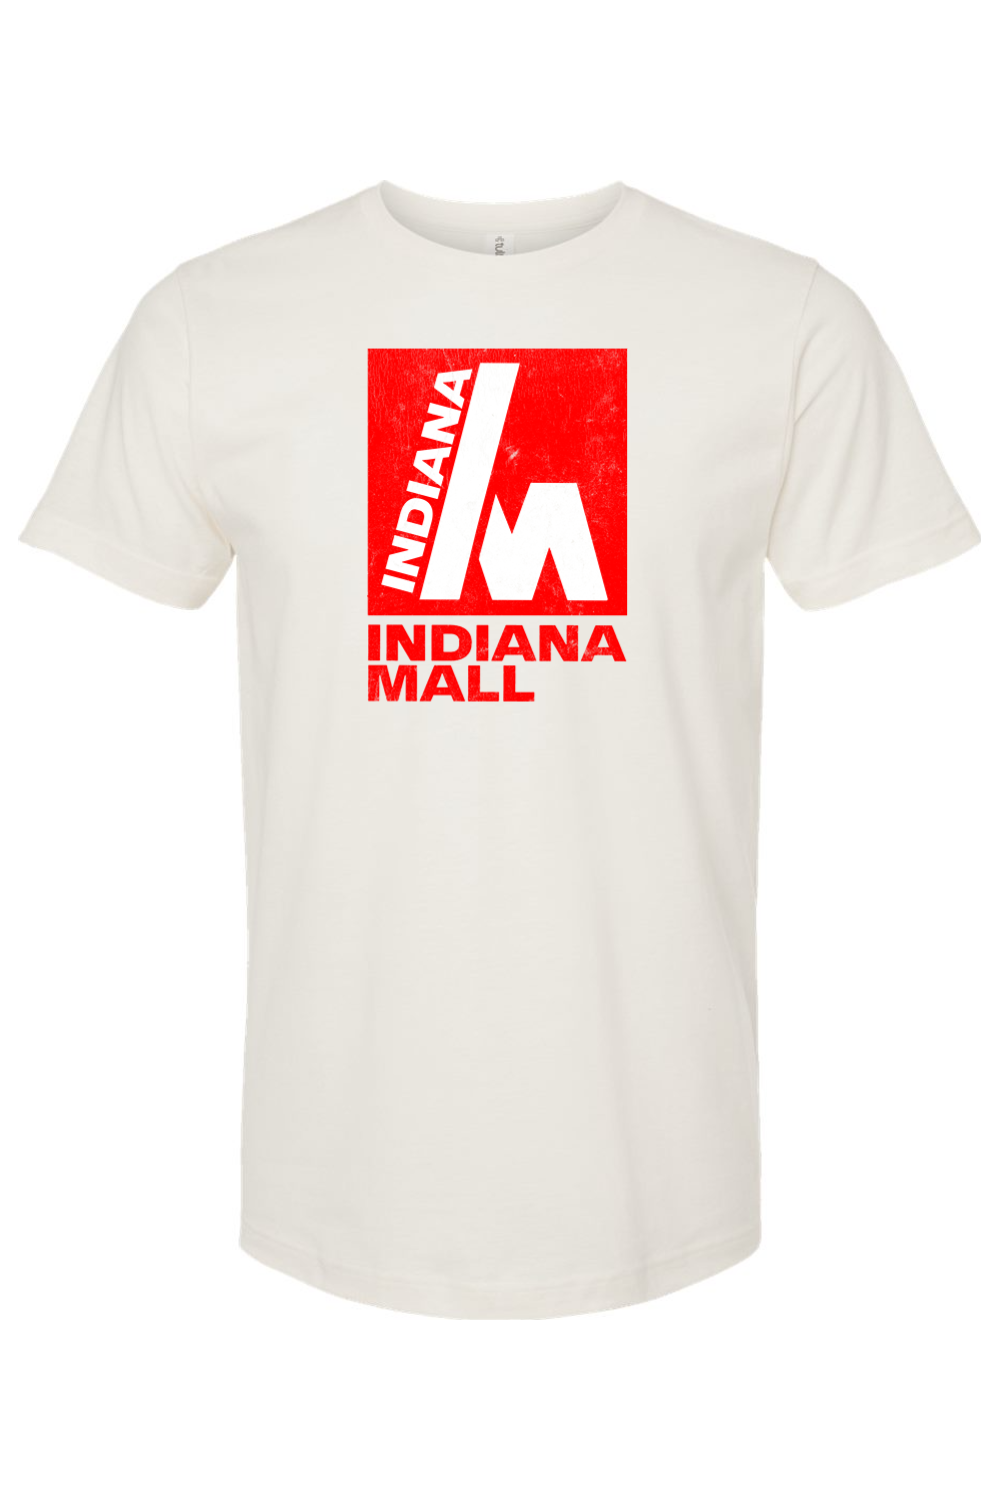 Indiana Mall - Indiana, PA